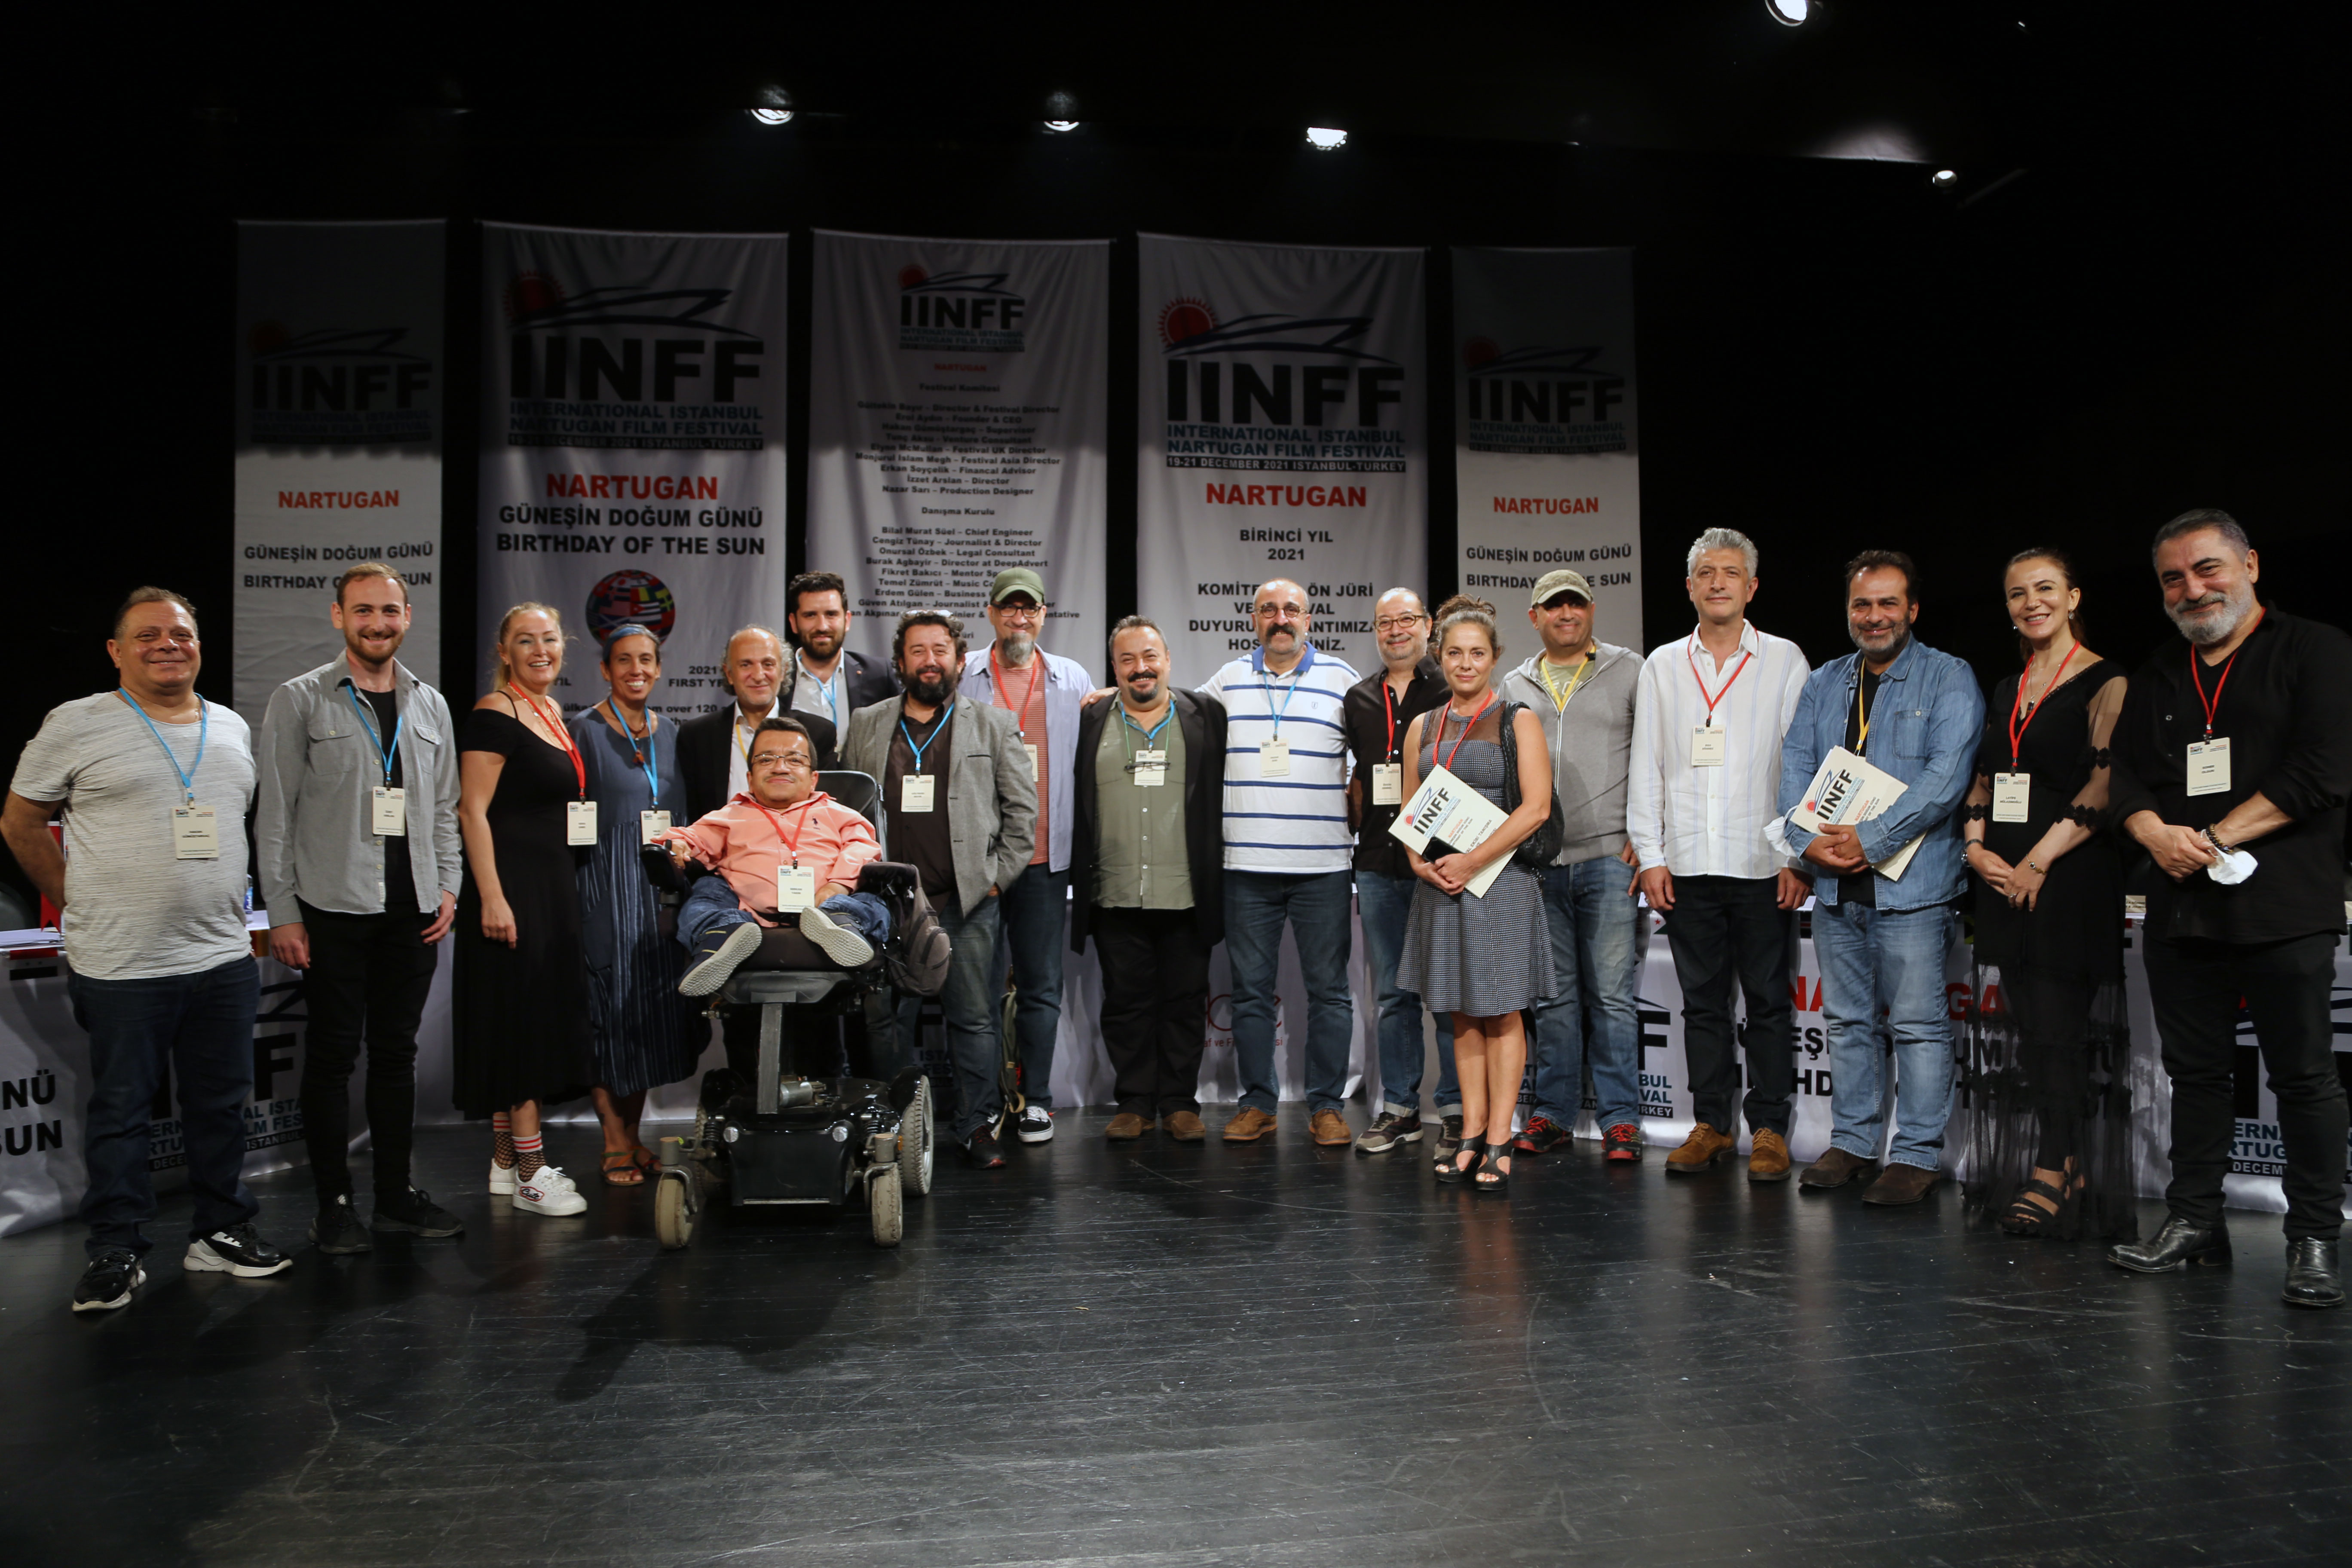 İstanbul Uluslararası Nartugan Film Festivali